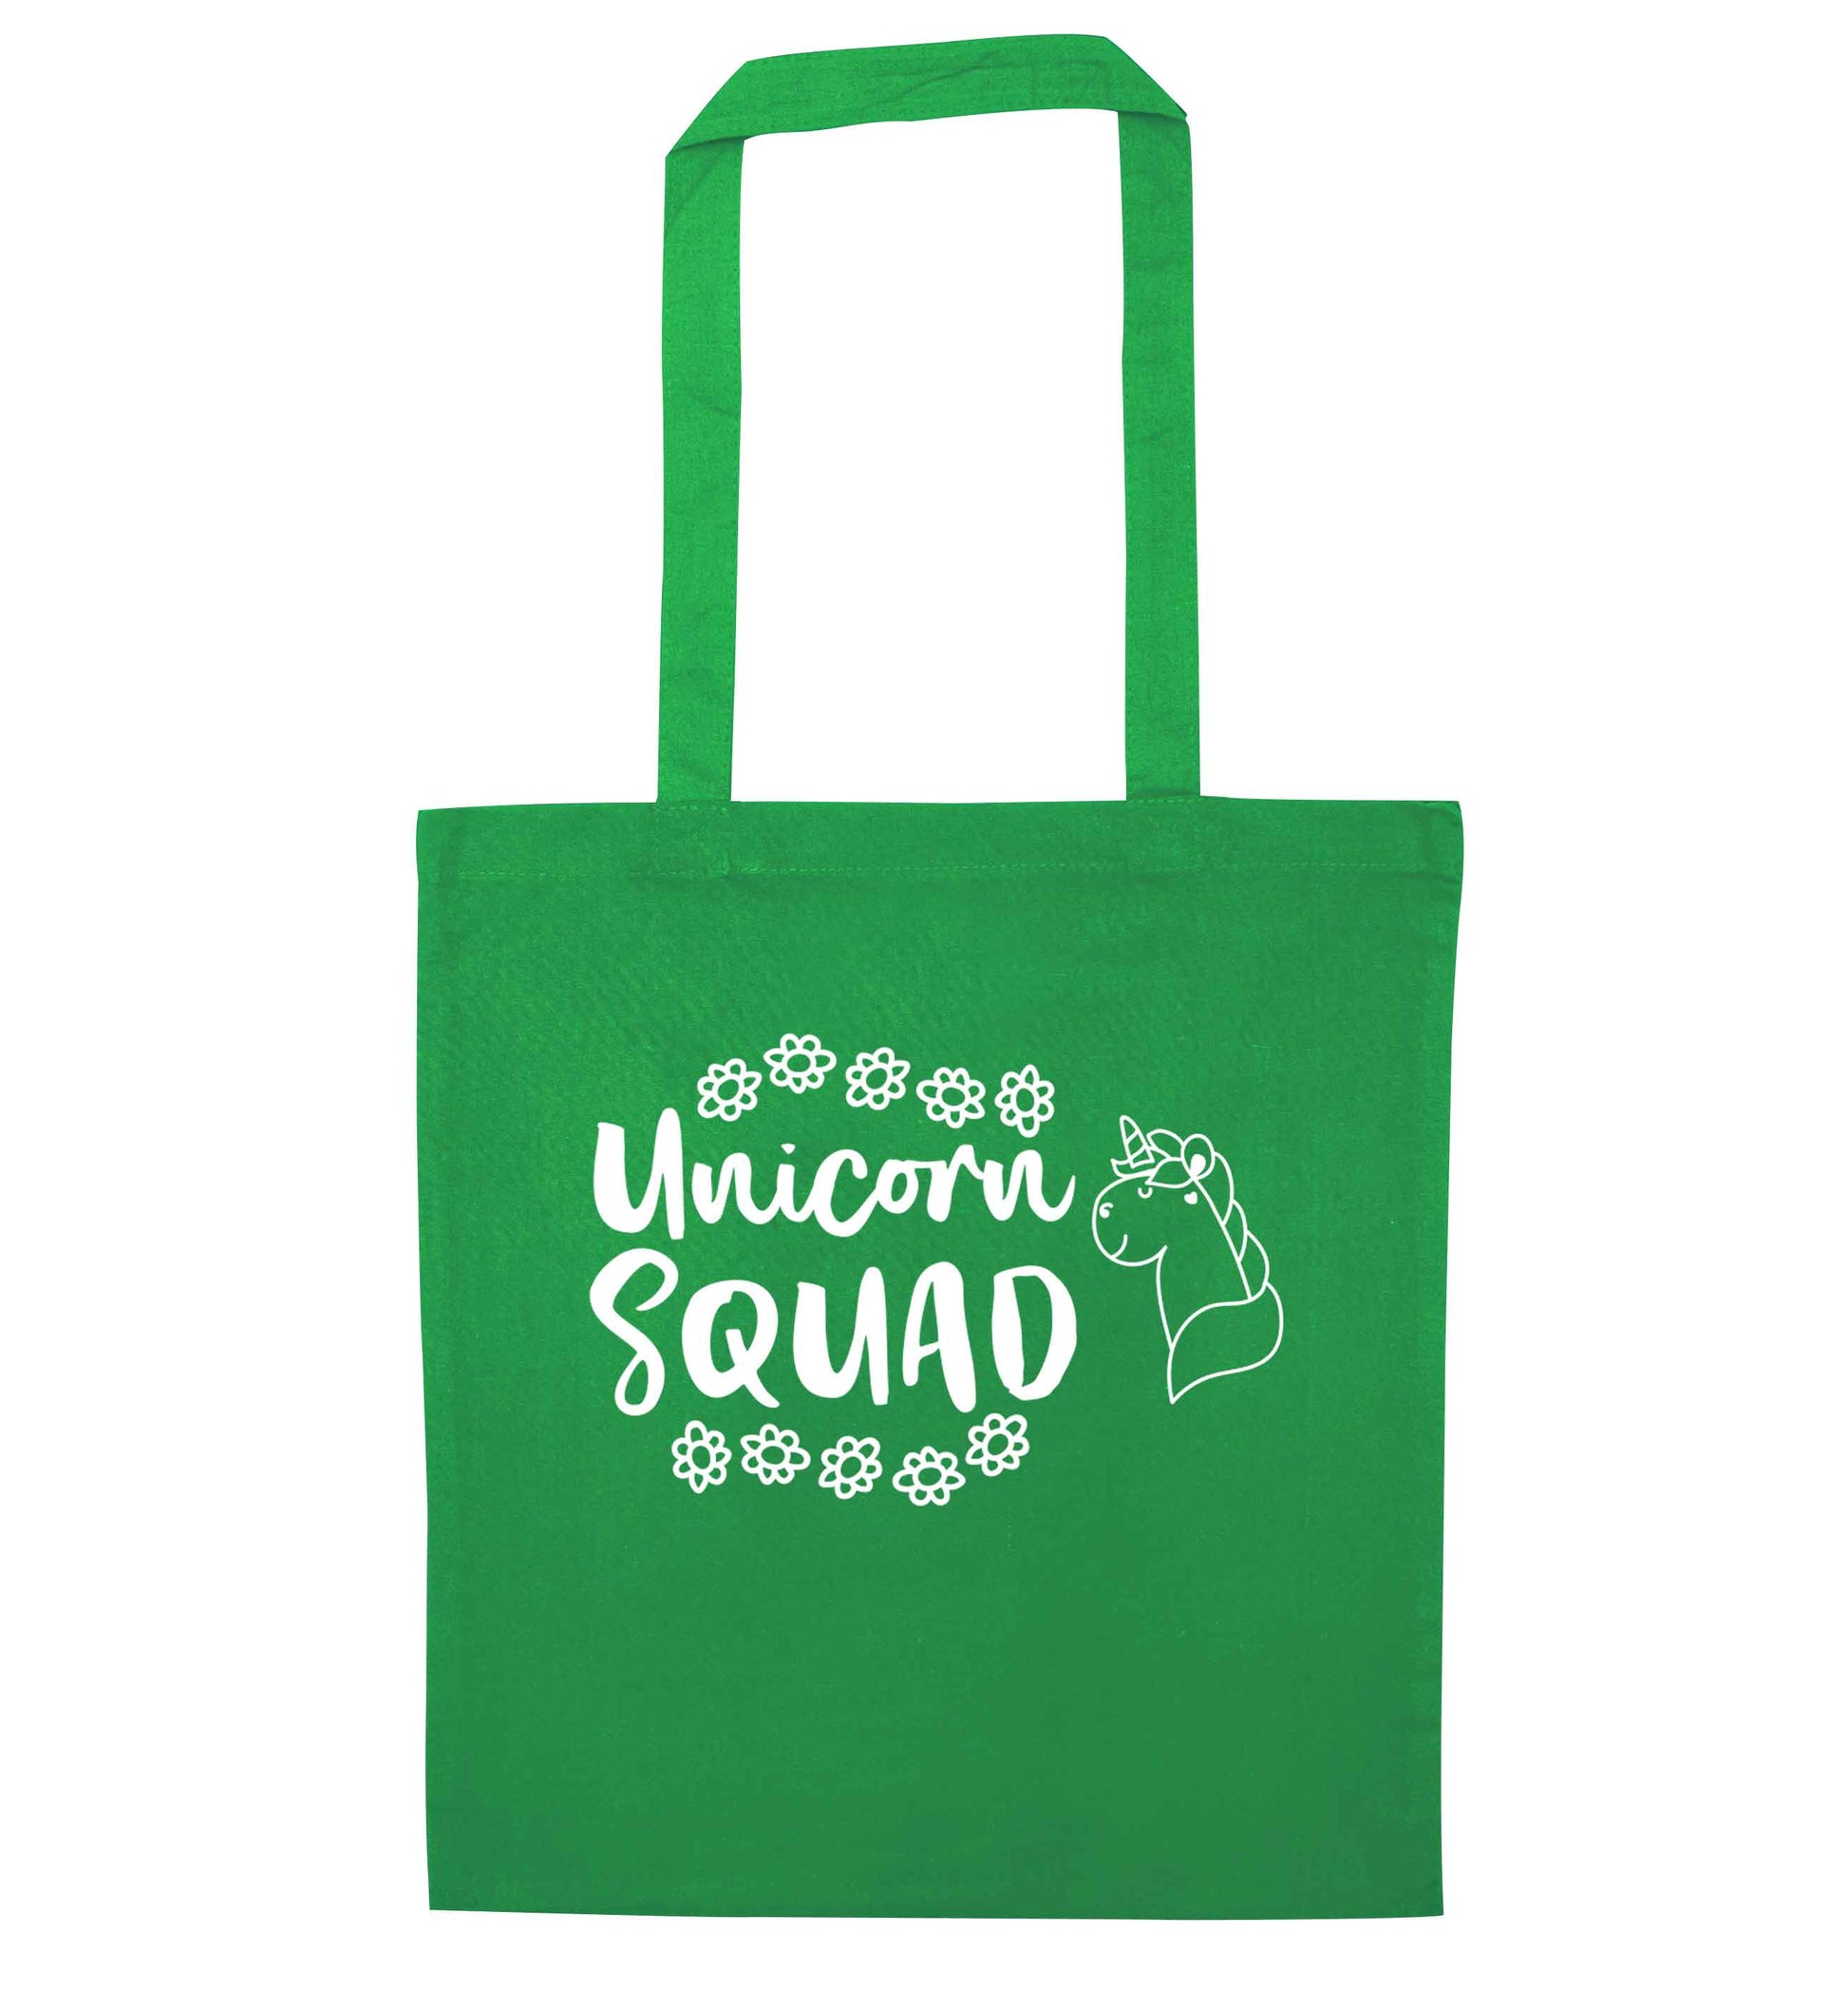 Unicorn Squad green tote bag